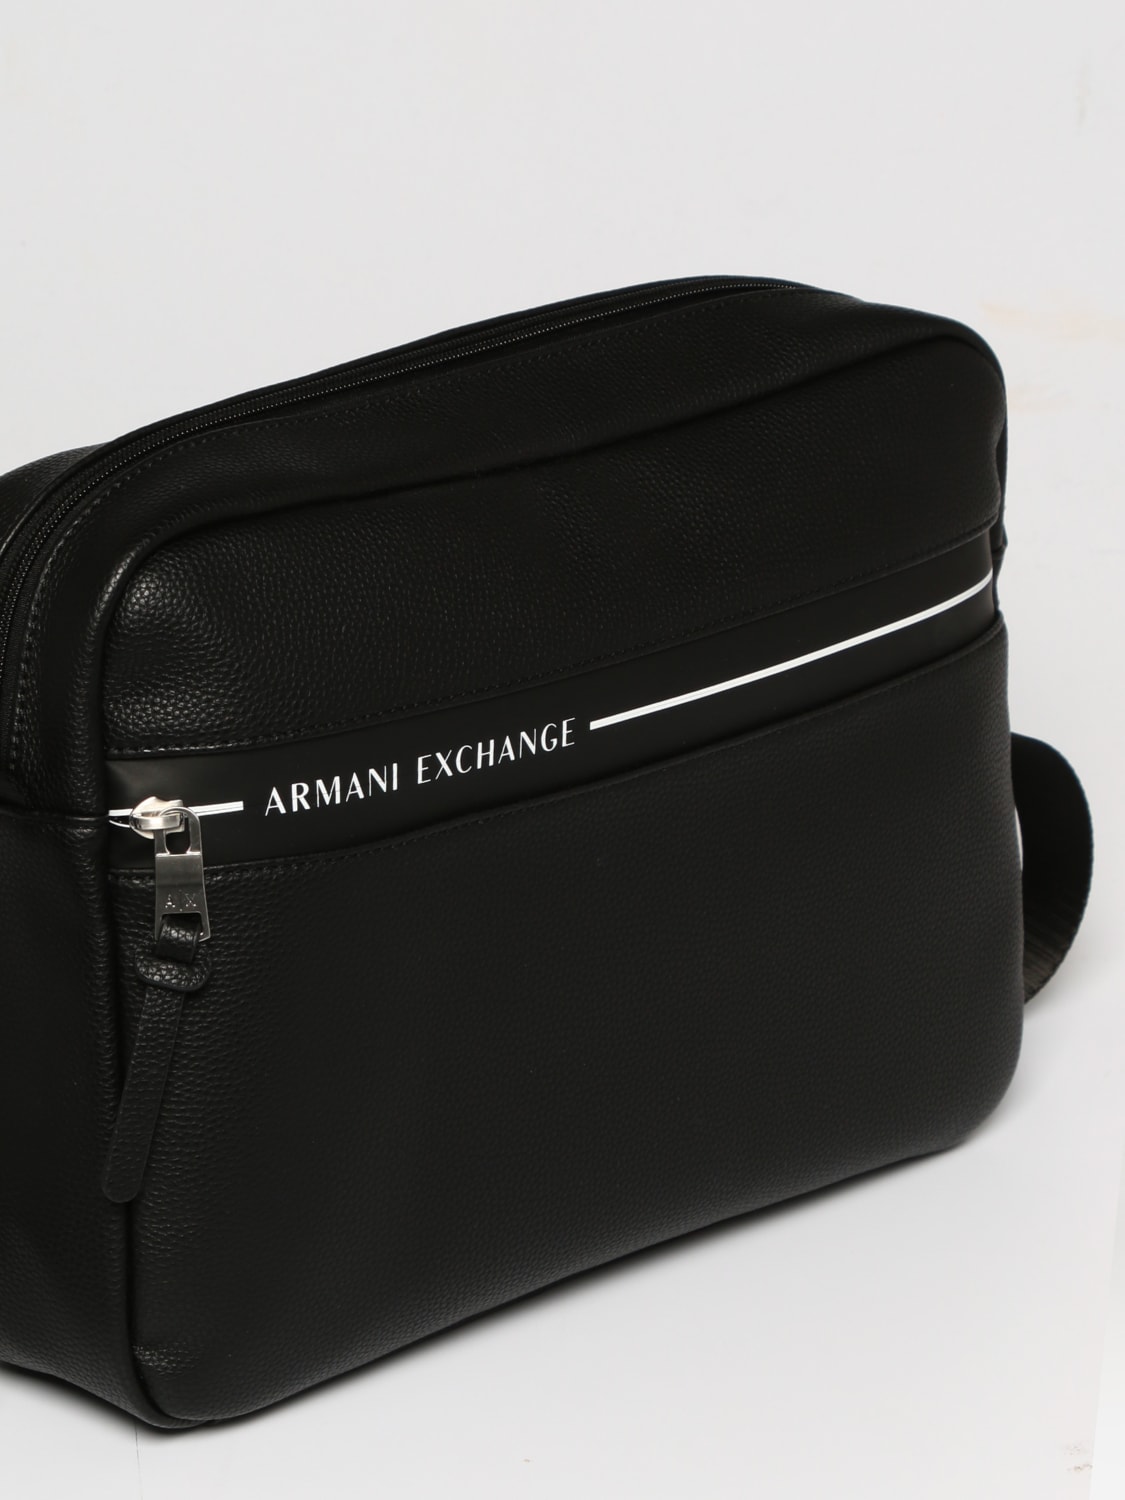 dyr forsikring Melting ARMANI EXCHANGE: shoulder bag for man - Black | Armani Exchange shoulder bag  9525403R832 online on GIGLIO.COM